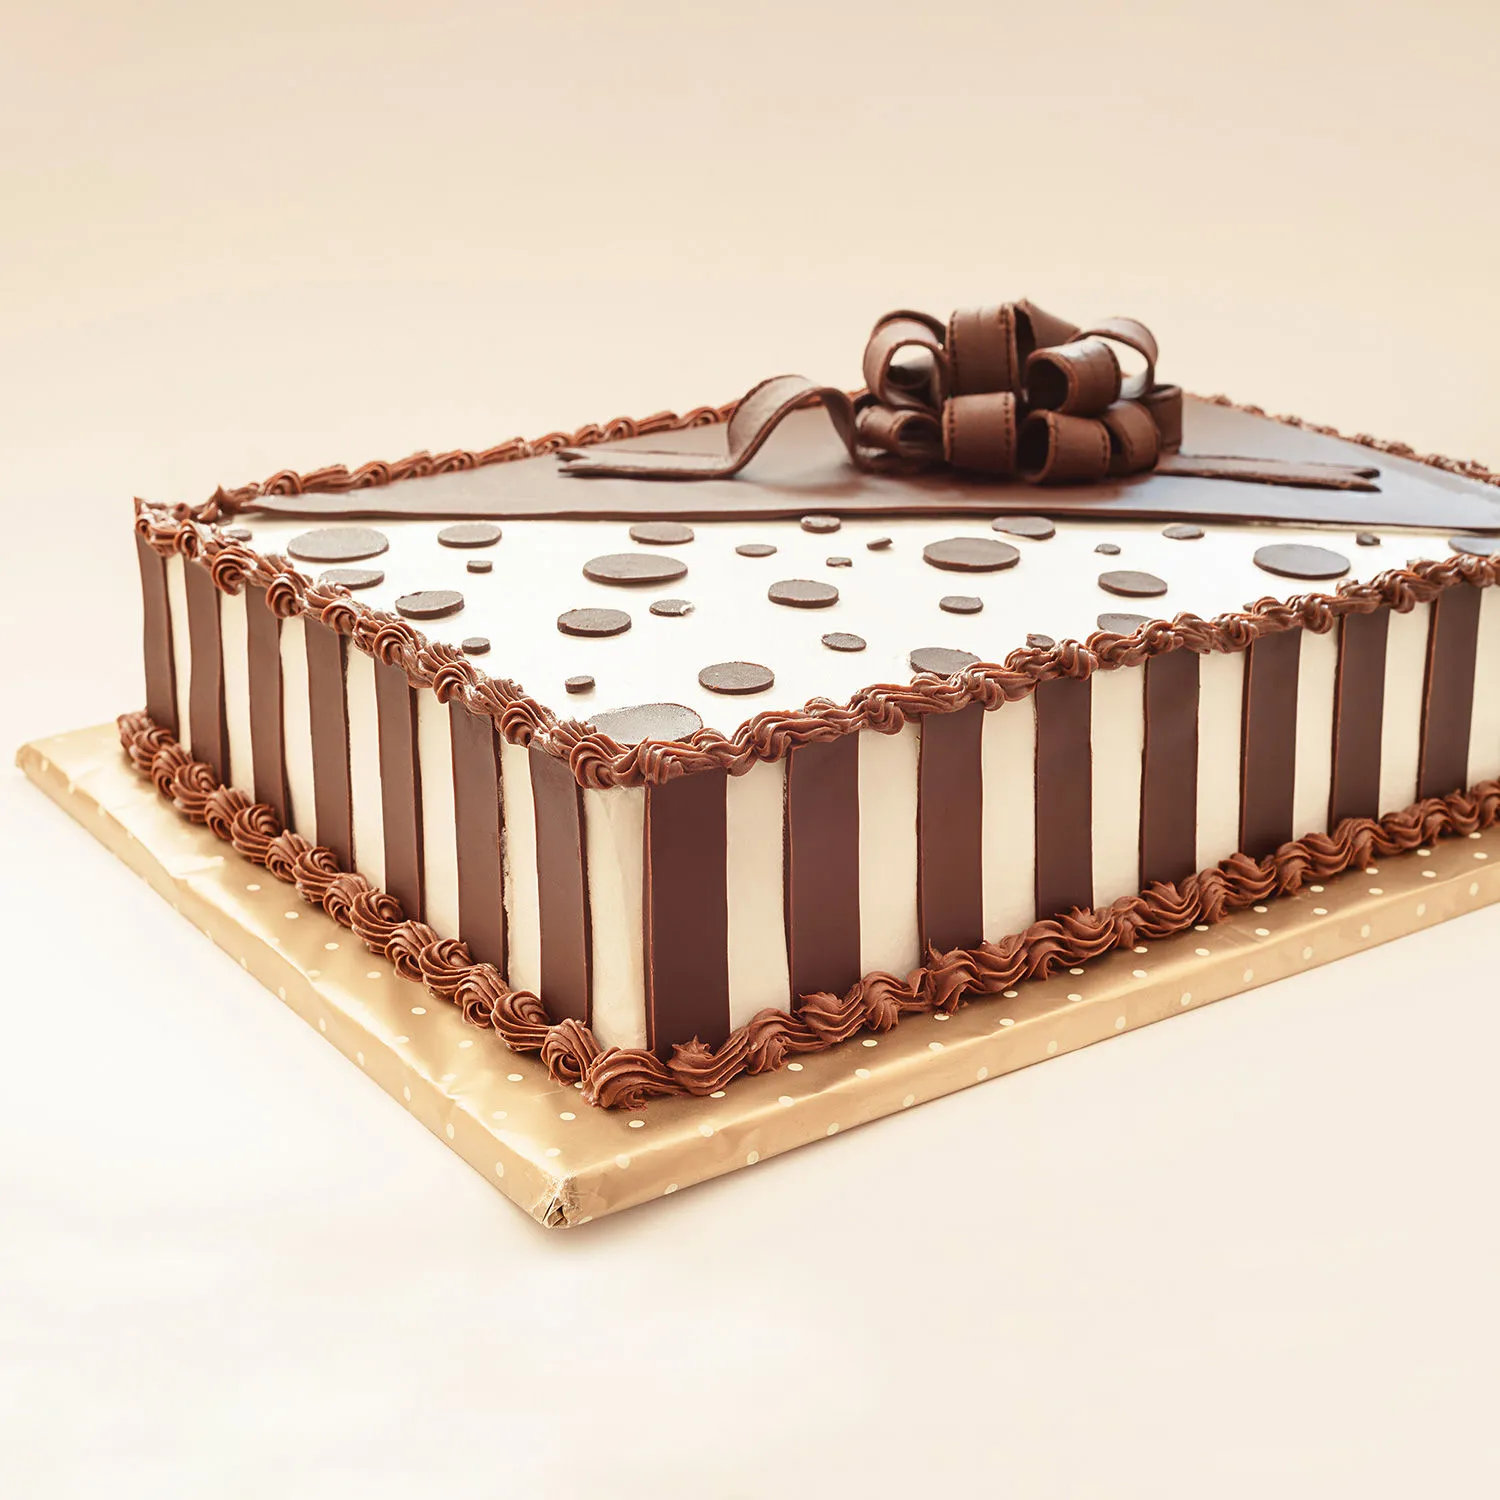 Chocolate Gift Cake - 1 KG